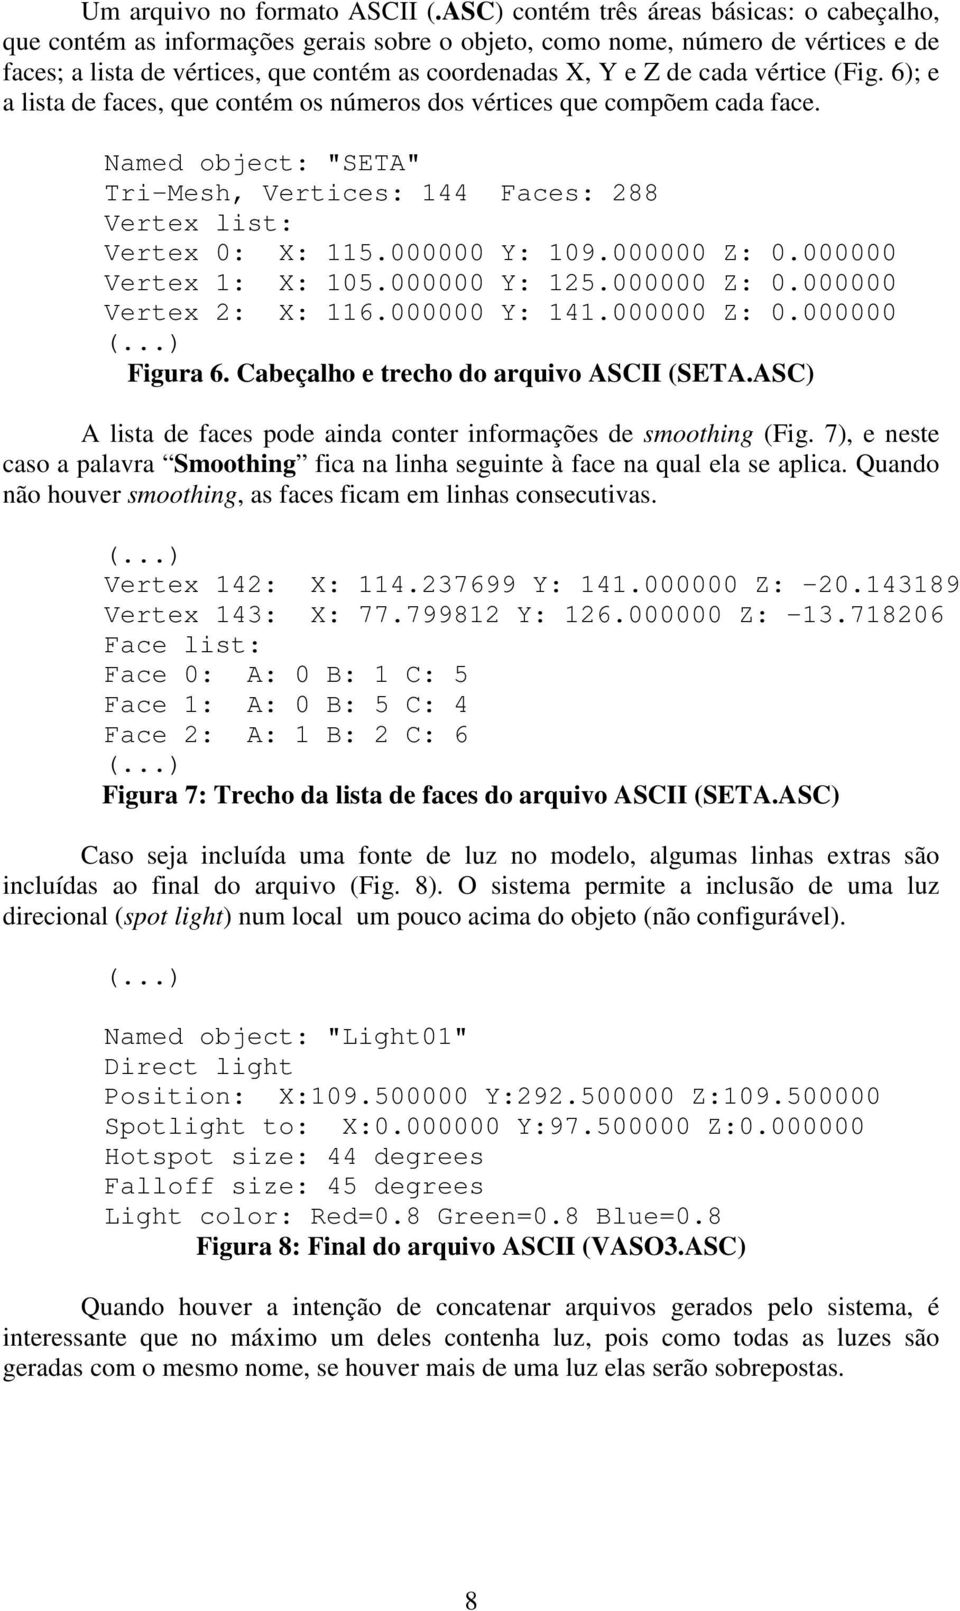 vértice (Fig. 6); e a lista de faces, que contém os números dos vértices que compõem cada face. Named object: "SETA" Tri-Mesh, Vertices: 144 Faces: 288 Vertex list: Vertex 0: X: 115.000000 Y: 109.